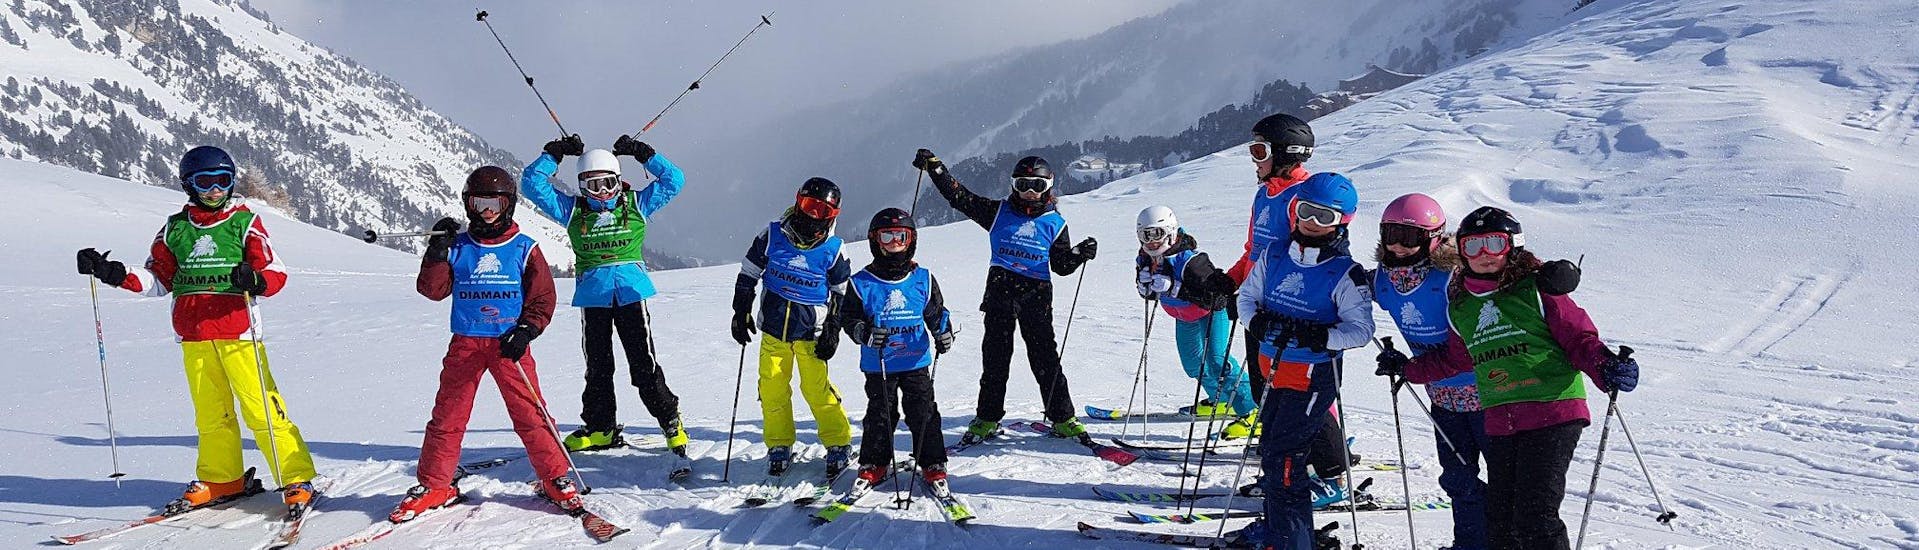 kids-ski-lessons-5-12-years-holiday-morning-esi-arc-aventures-hero